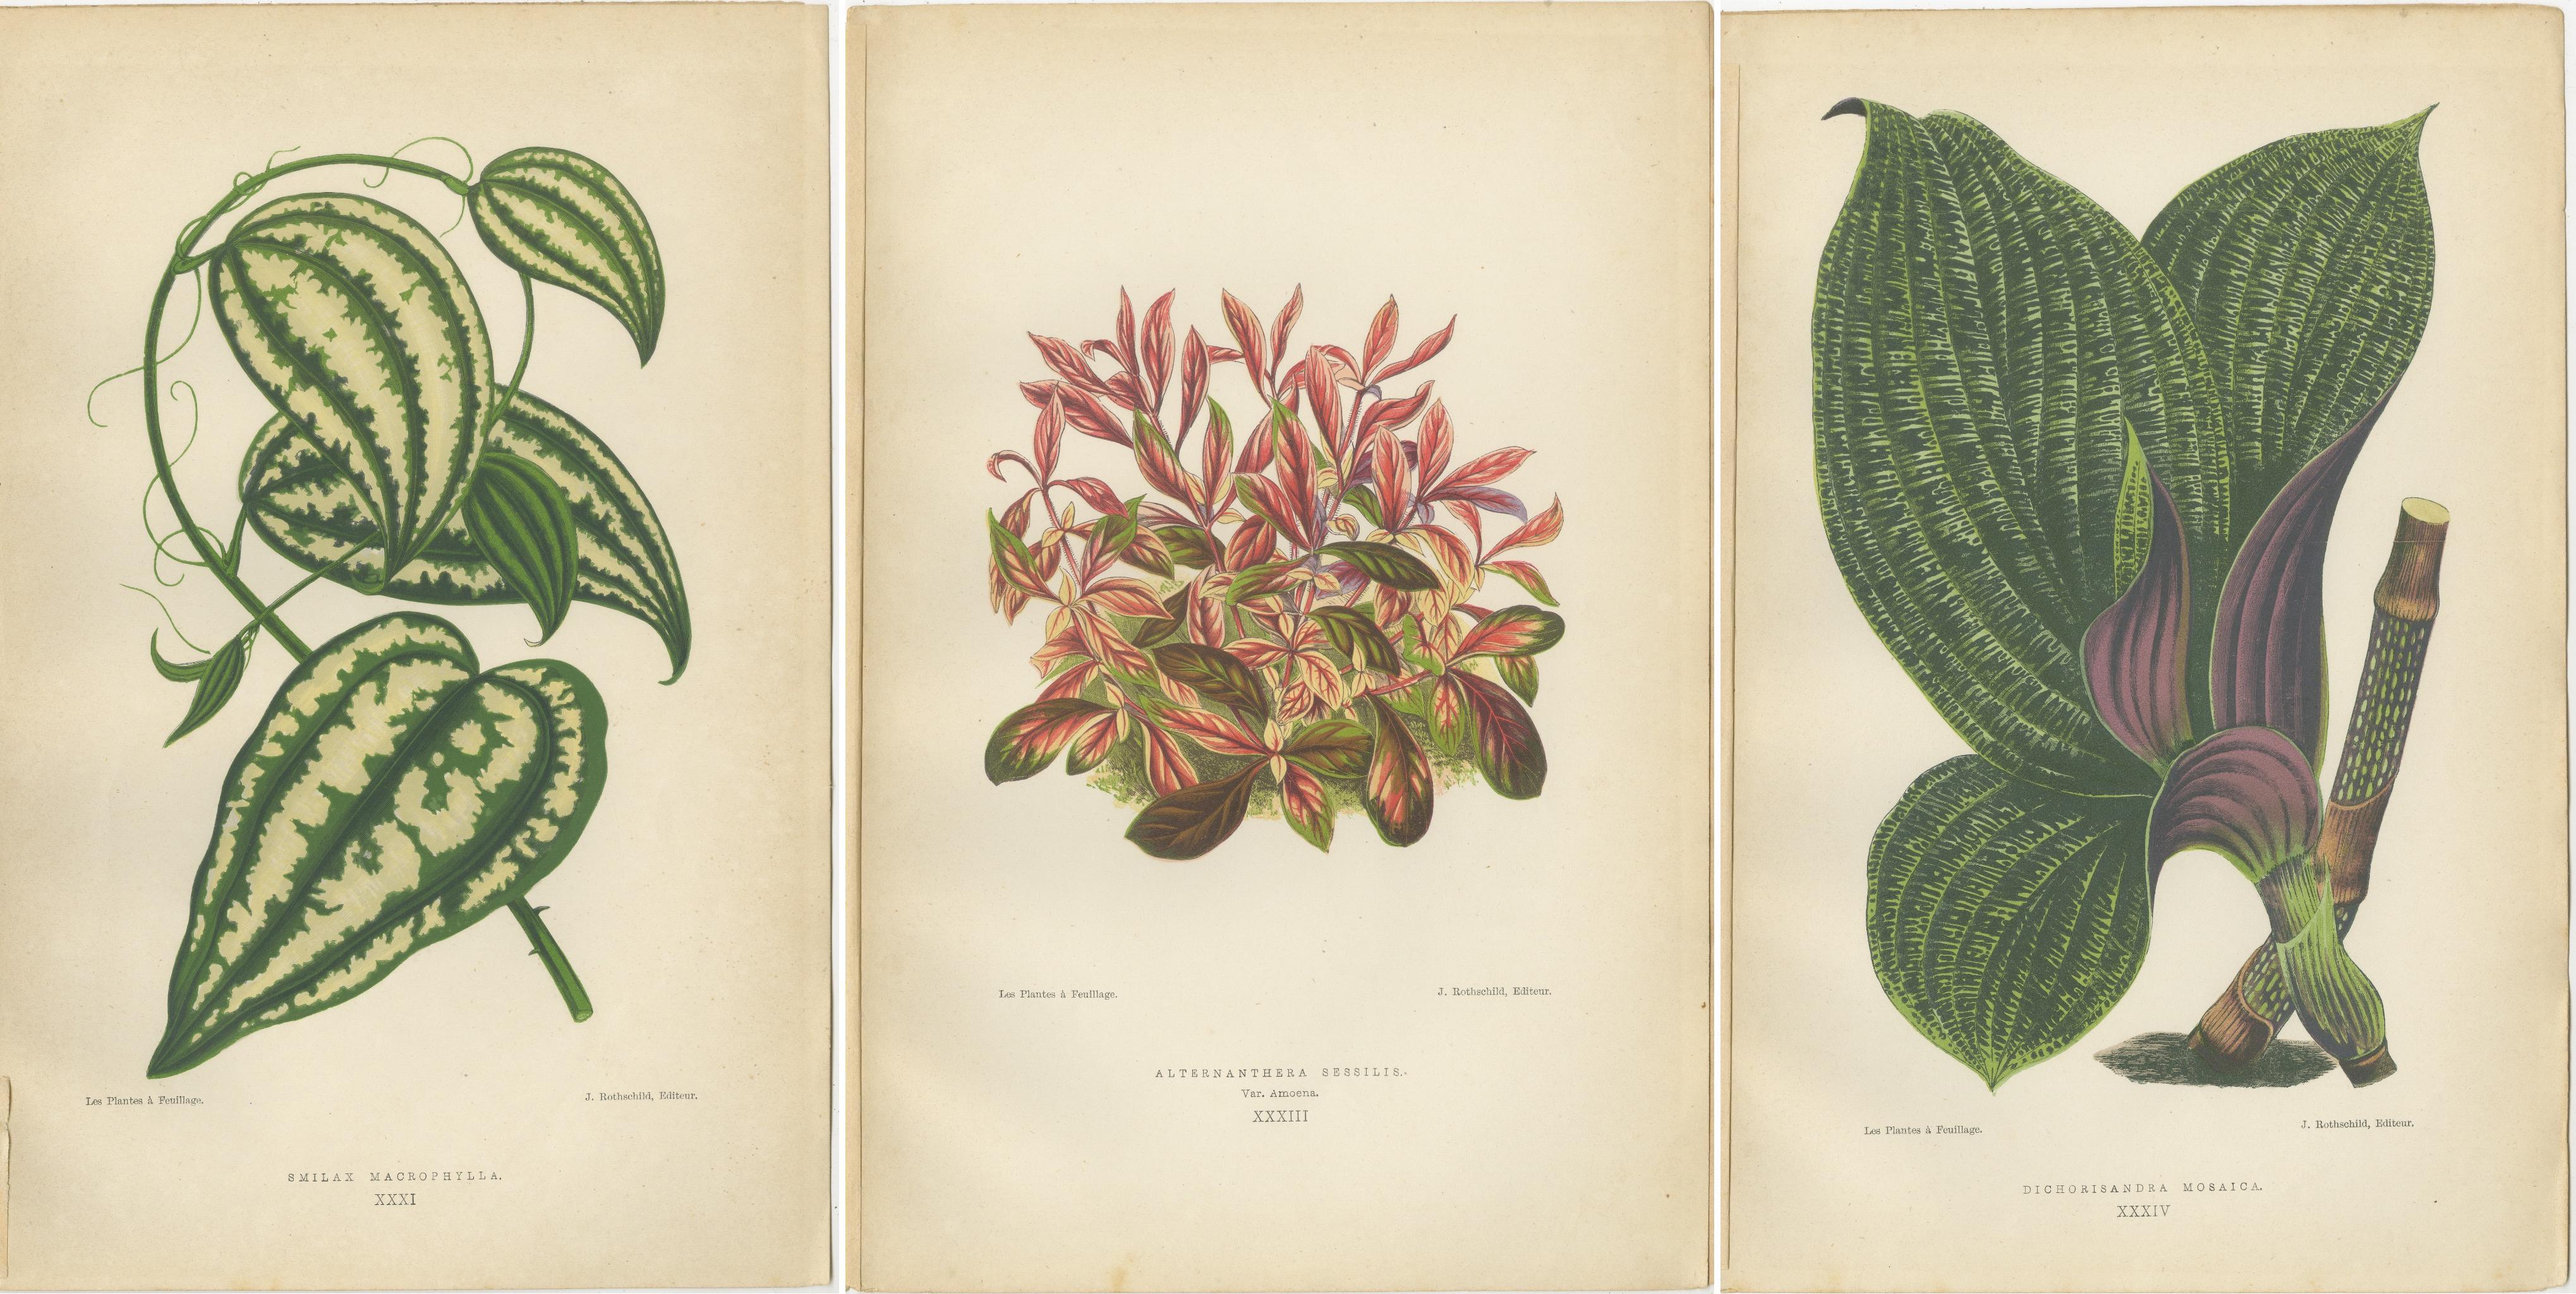 Paper Verdant Splendor: Botanical Illustrations of Foliage from 1880 For Sale